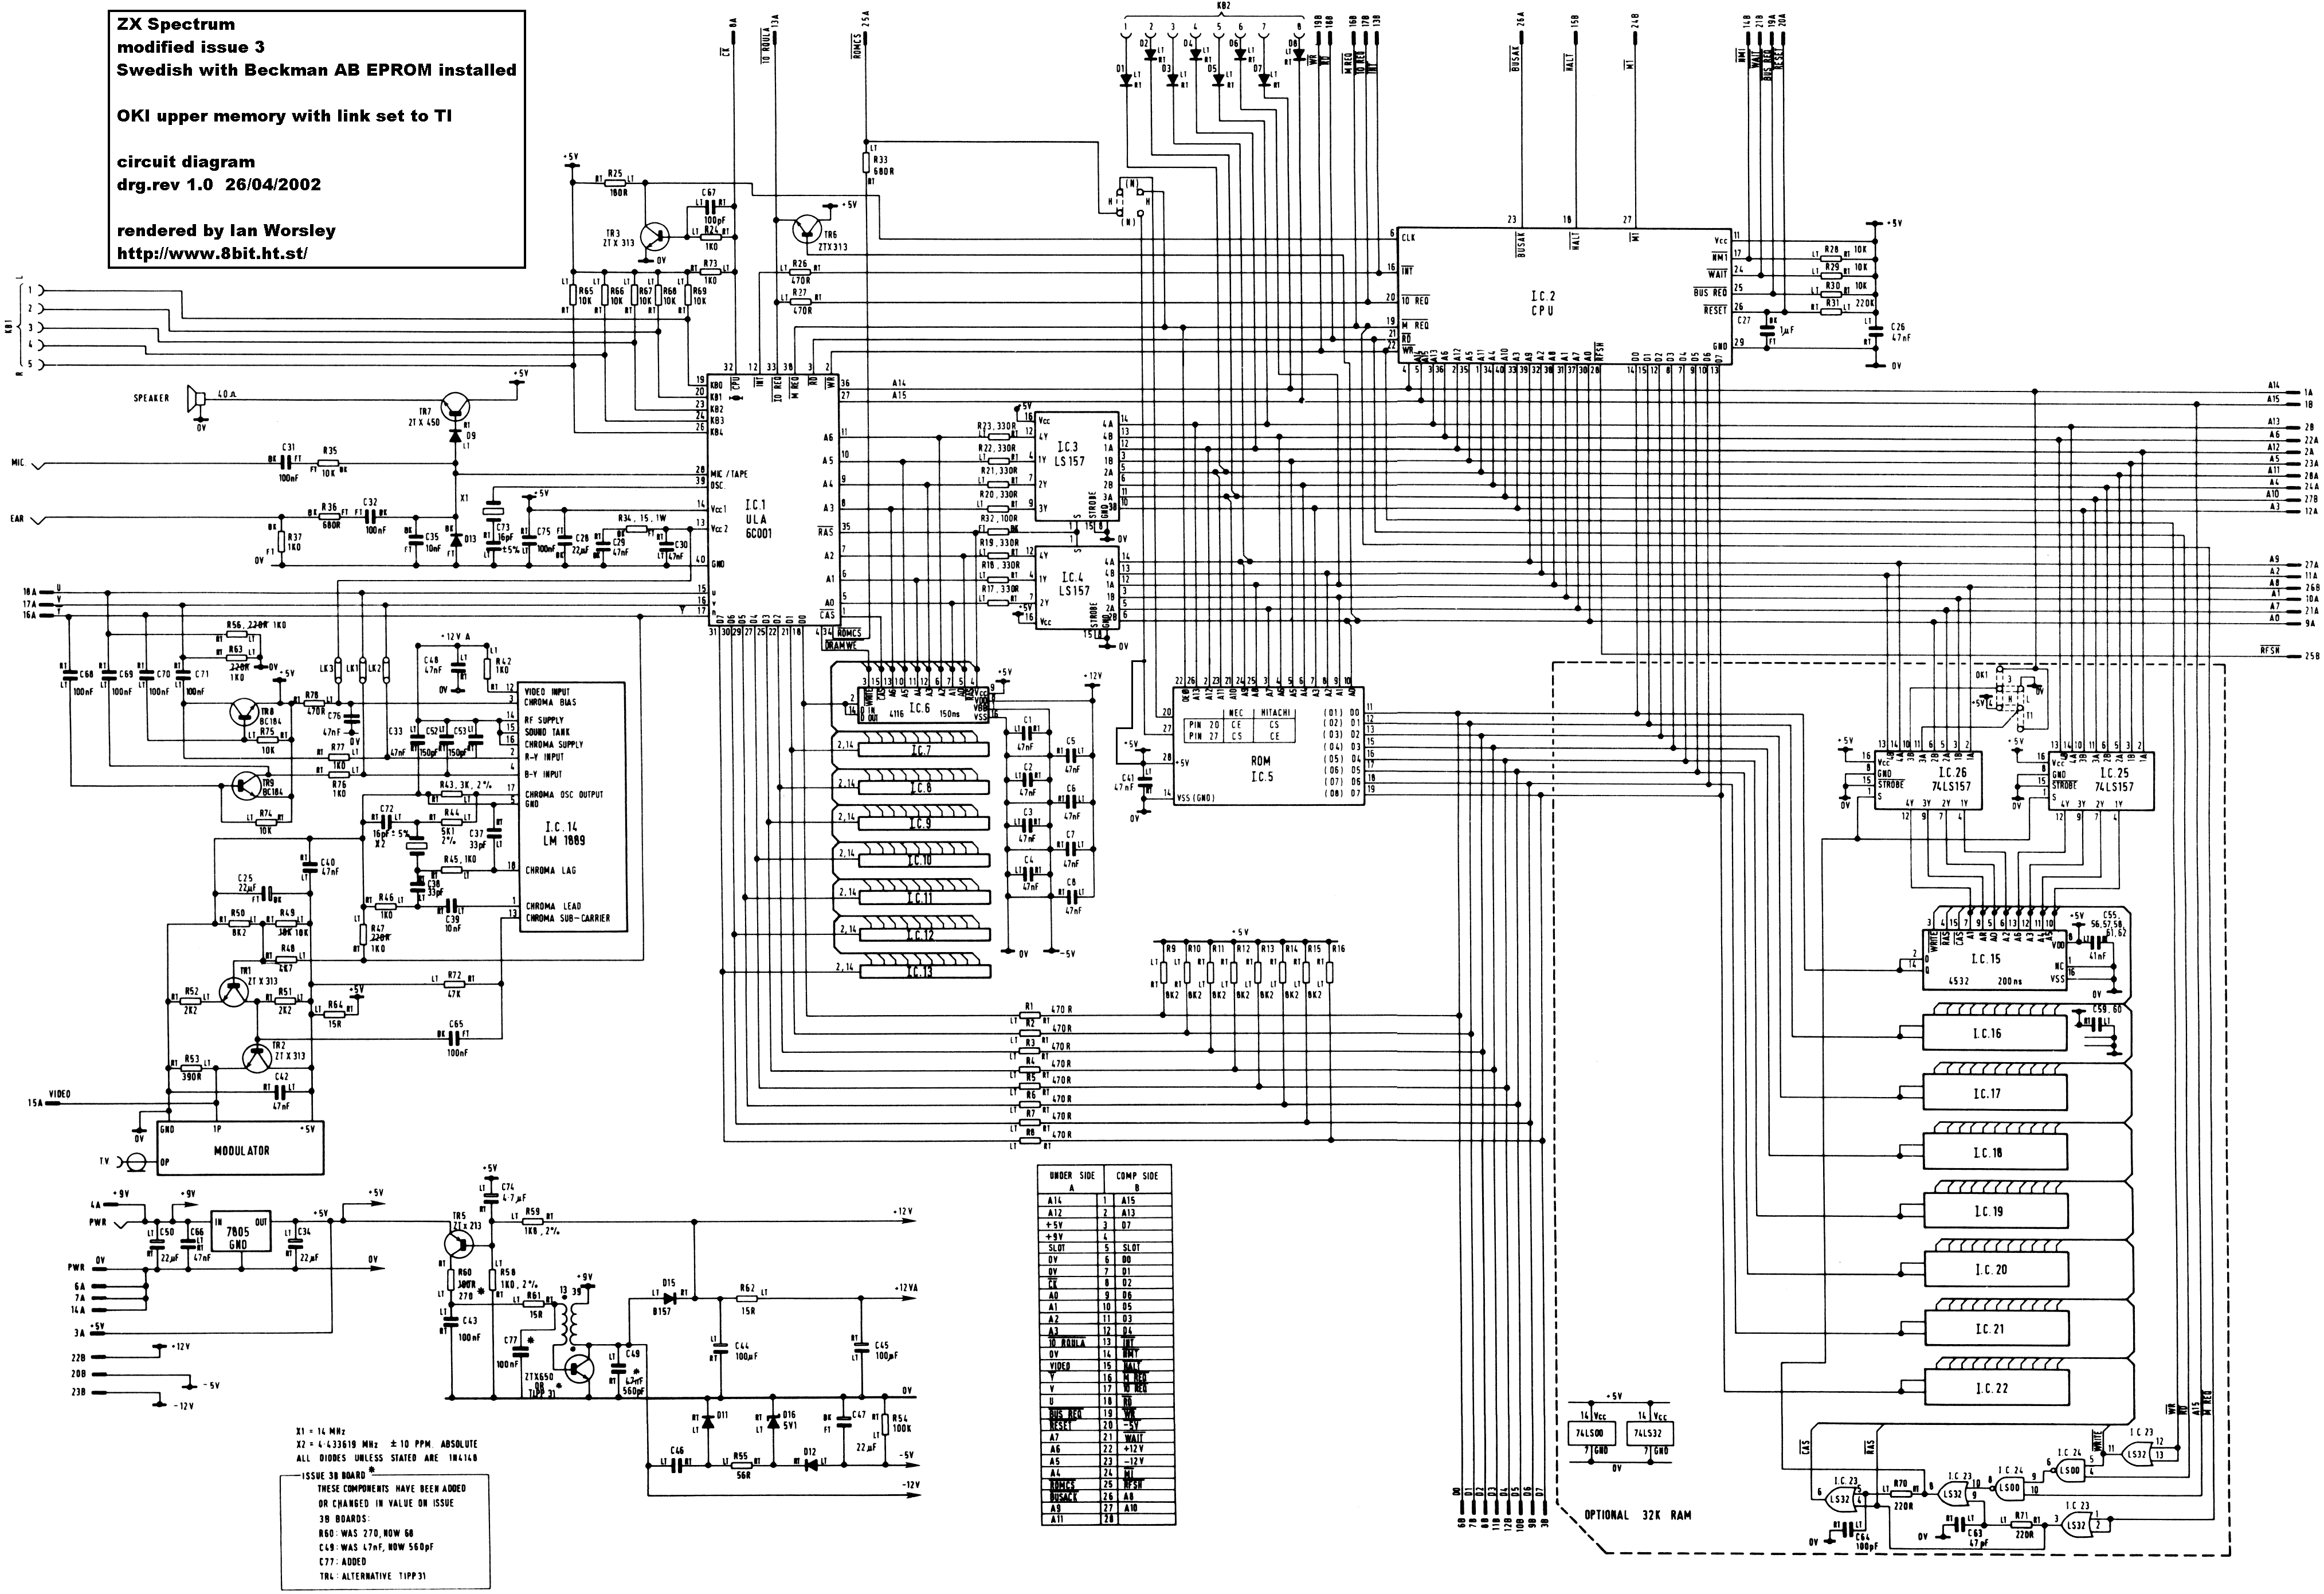 Directory: /Vintage/Sinclair/82/Sinclair ZX Spectrum/Circuit Diagrams/